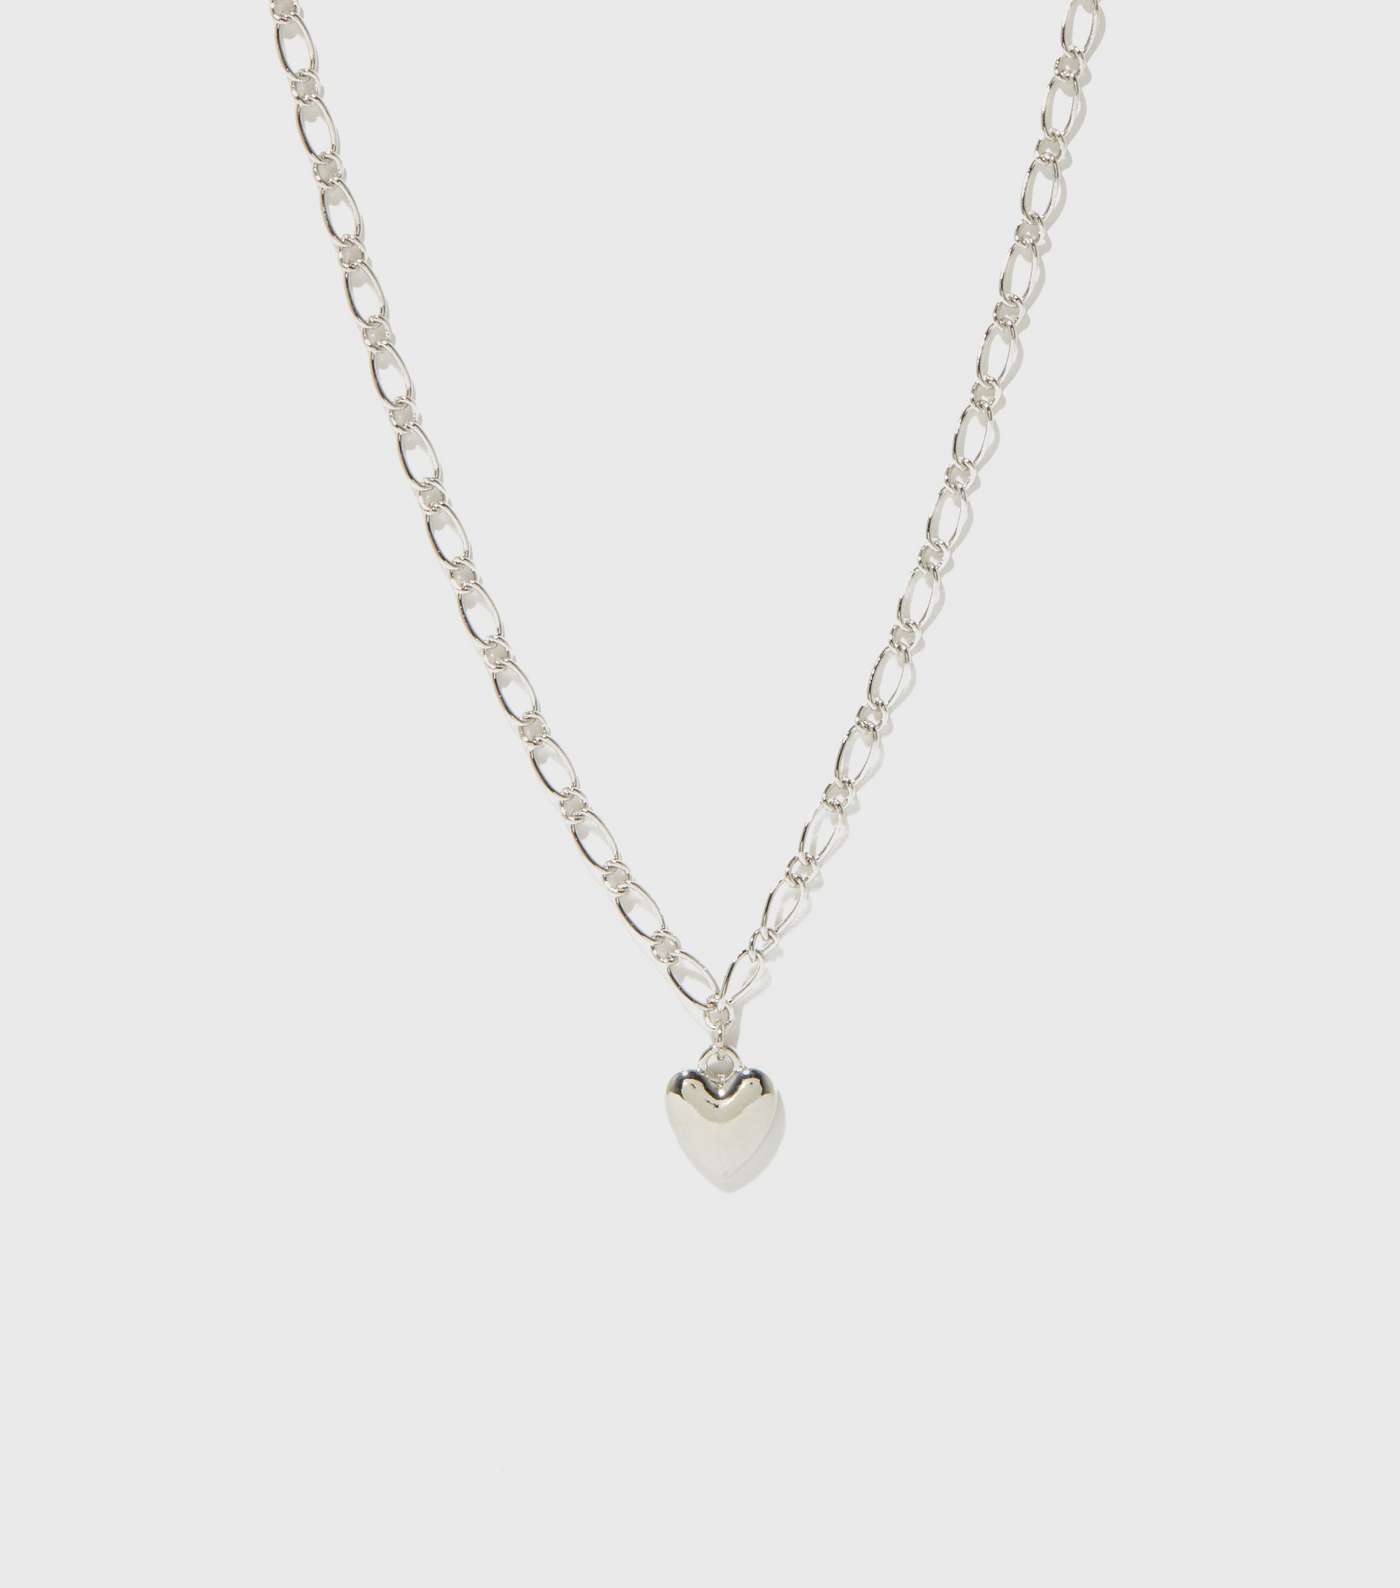 Silver Heart Chain Pendant Necklace